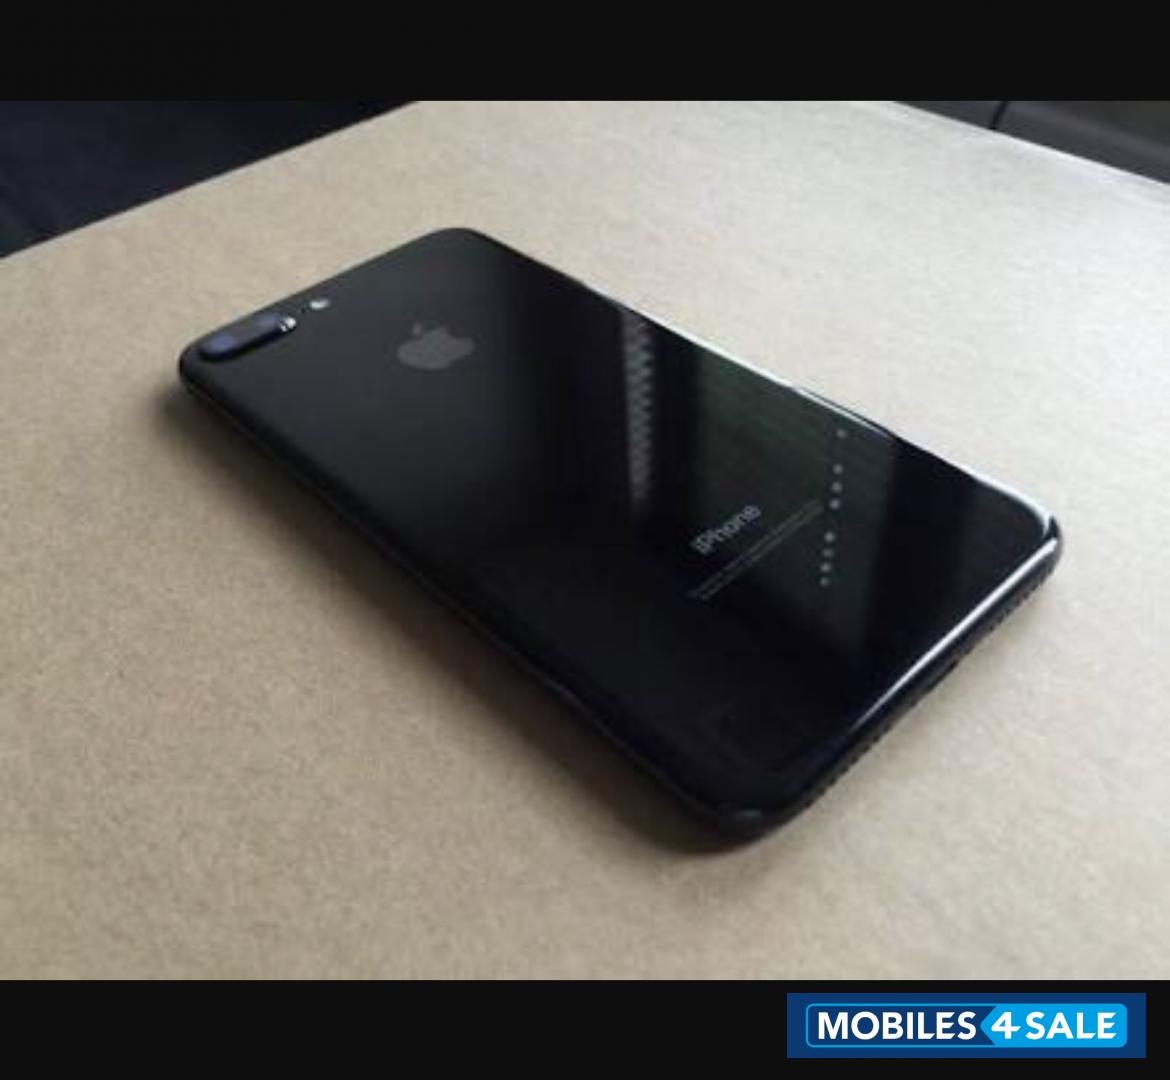 Jet Black 256gb Apple iPhone 7 Plus